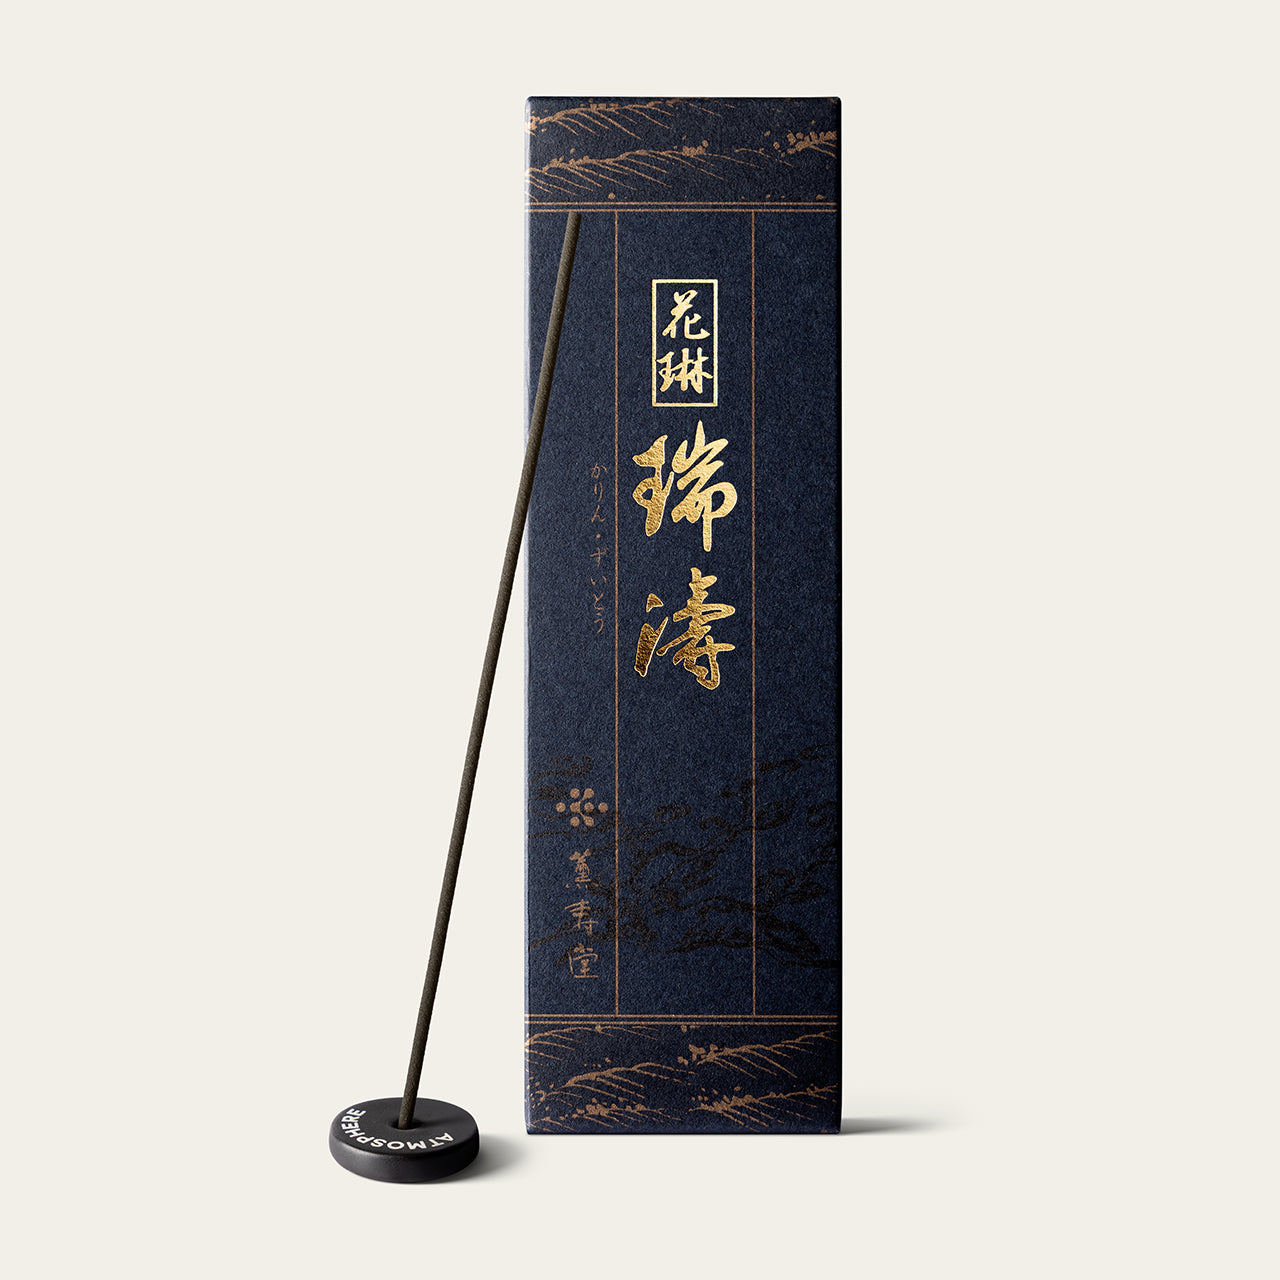 Kunjudo Golden Wave Karin Zuito Japanese incense sticks (80 sticks) with Atmosphere ceramic incense holder